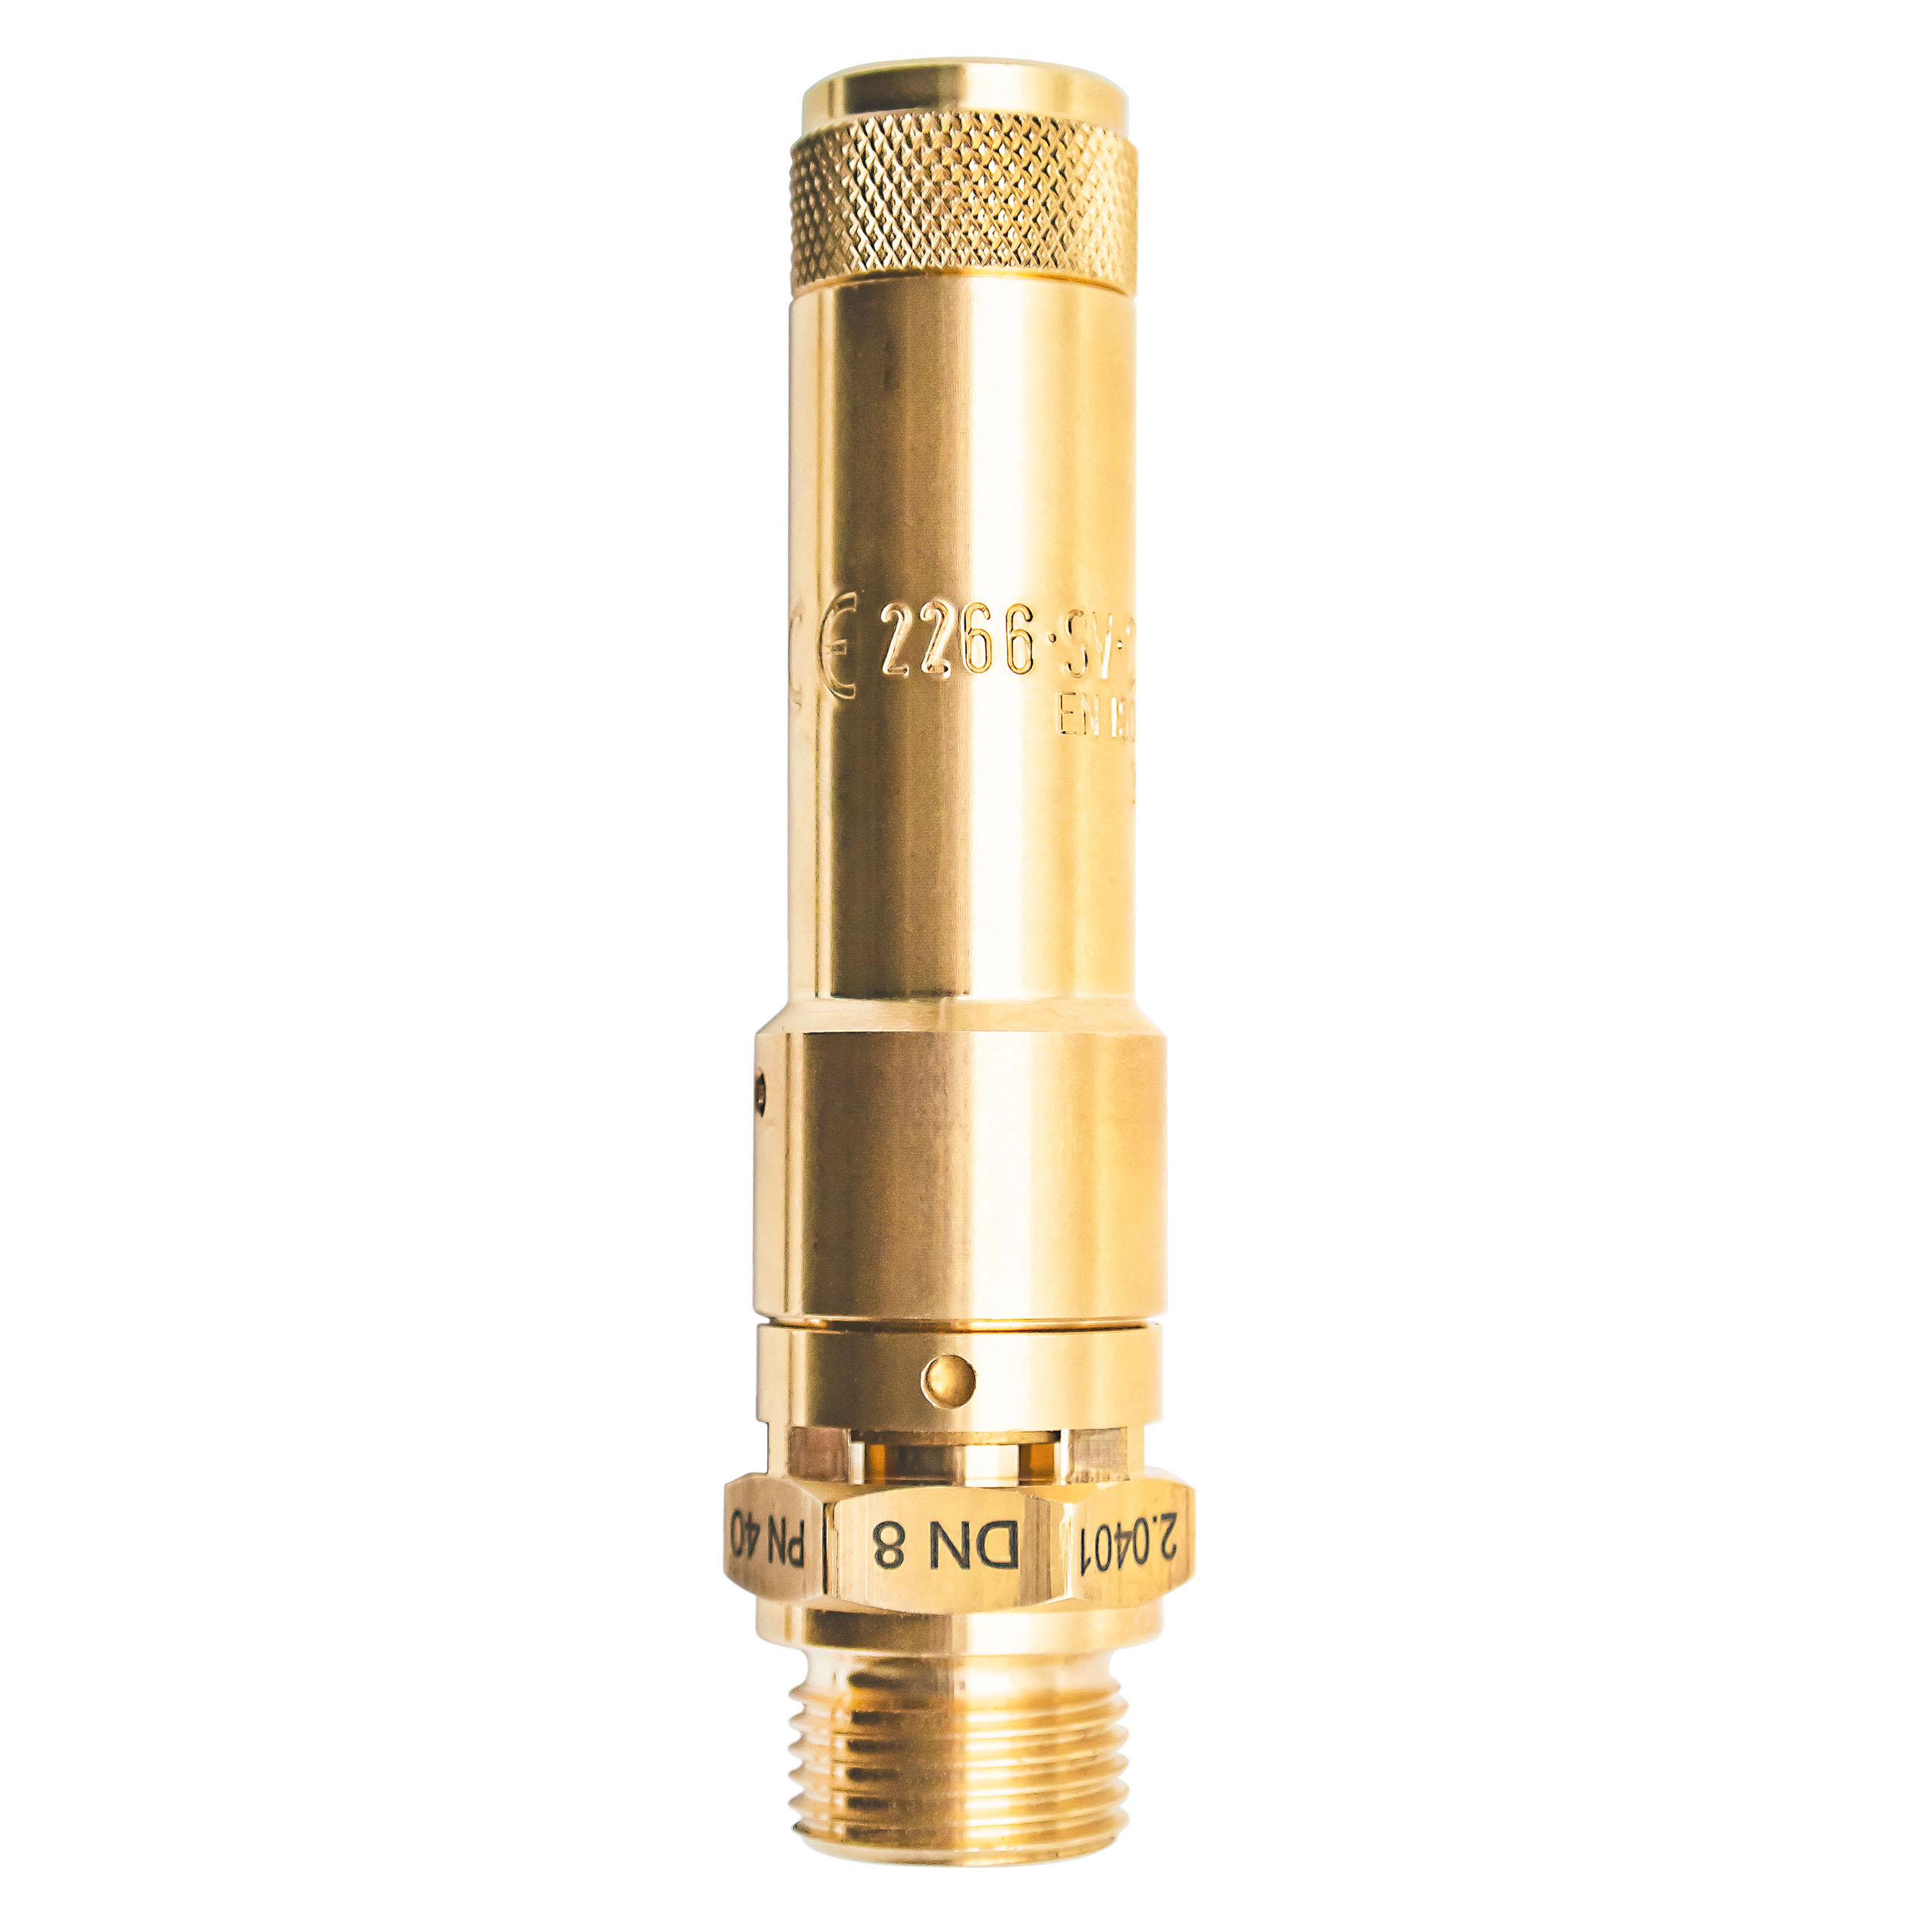 Component-tested safety valve DN 8, G¼, pressure: 9.1-15 bar